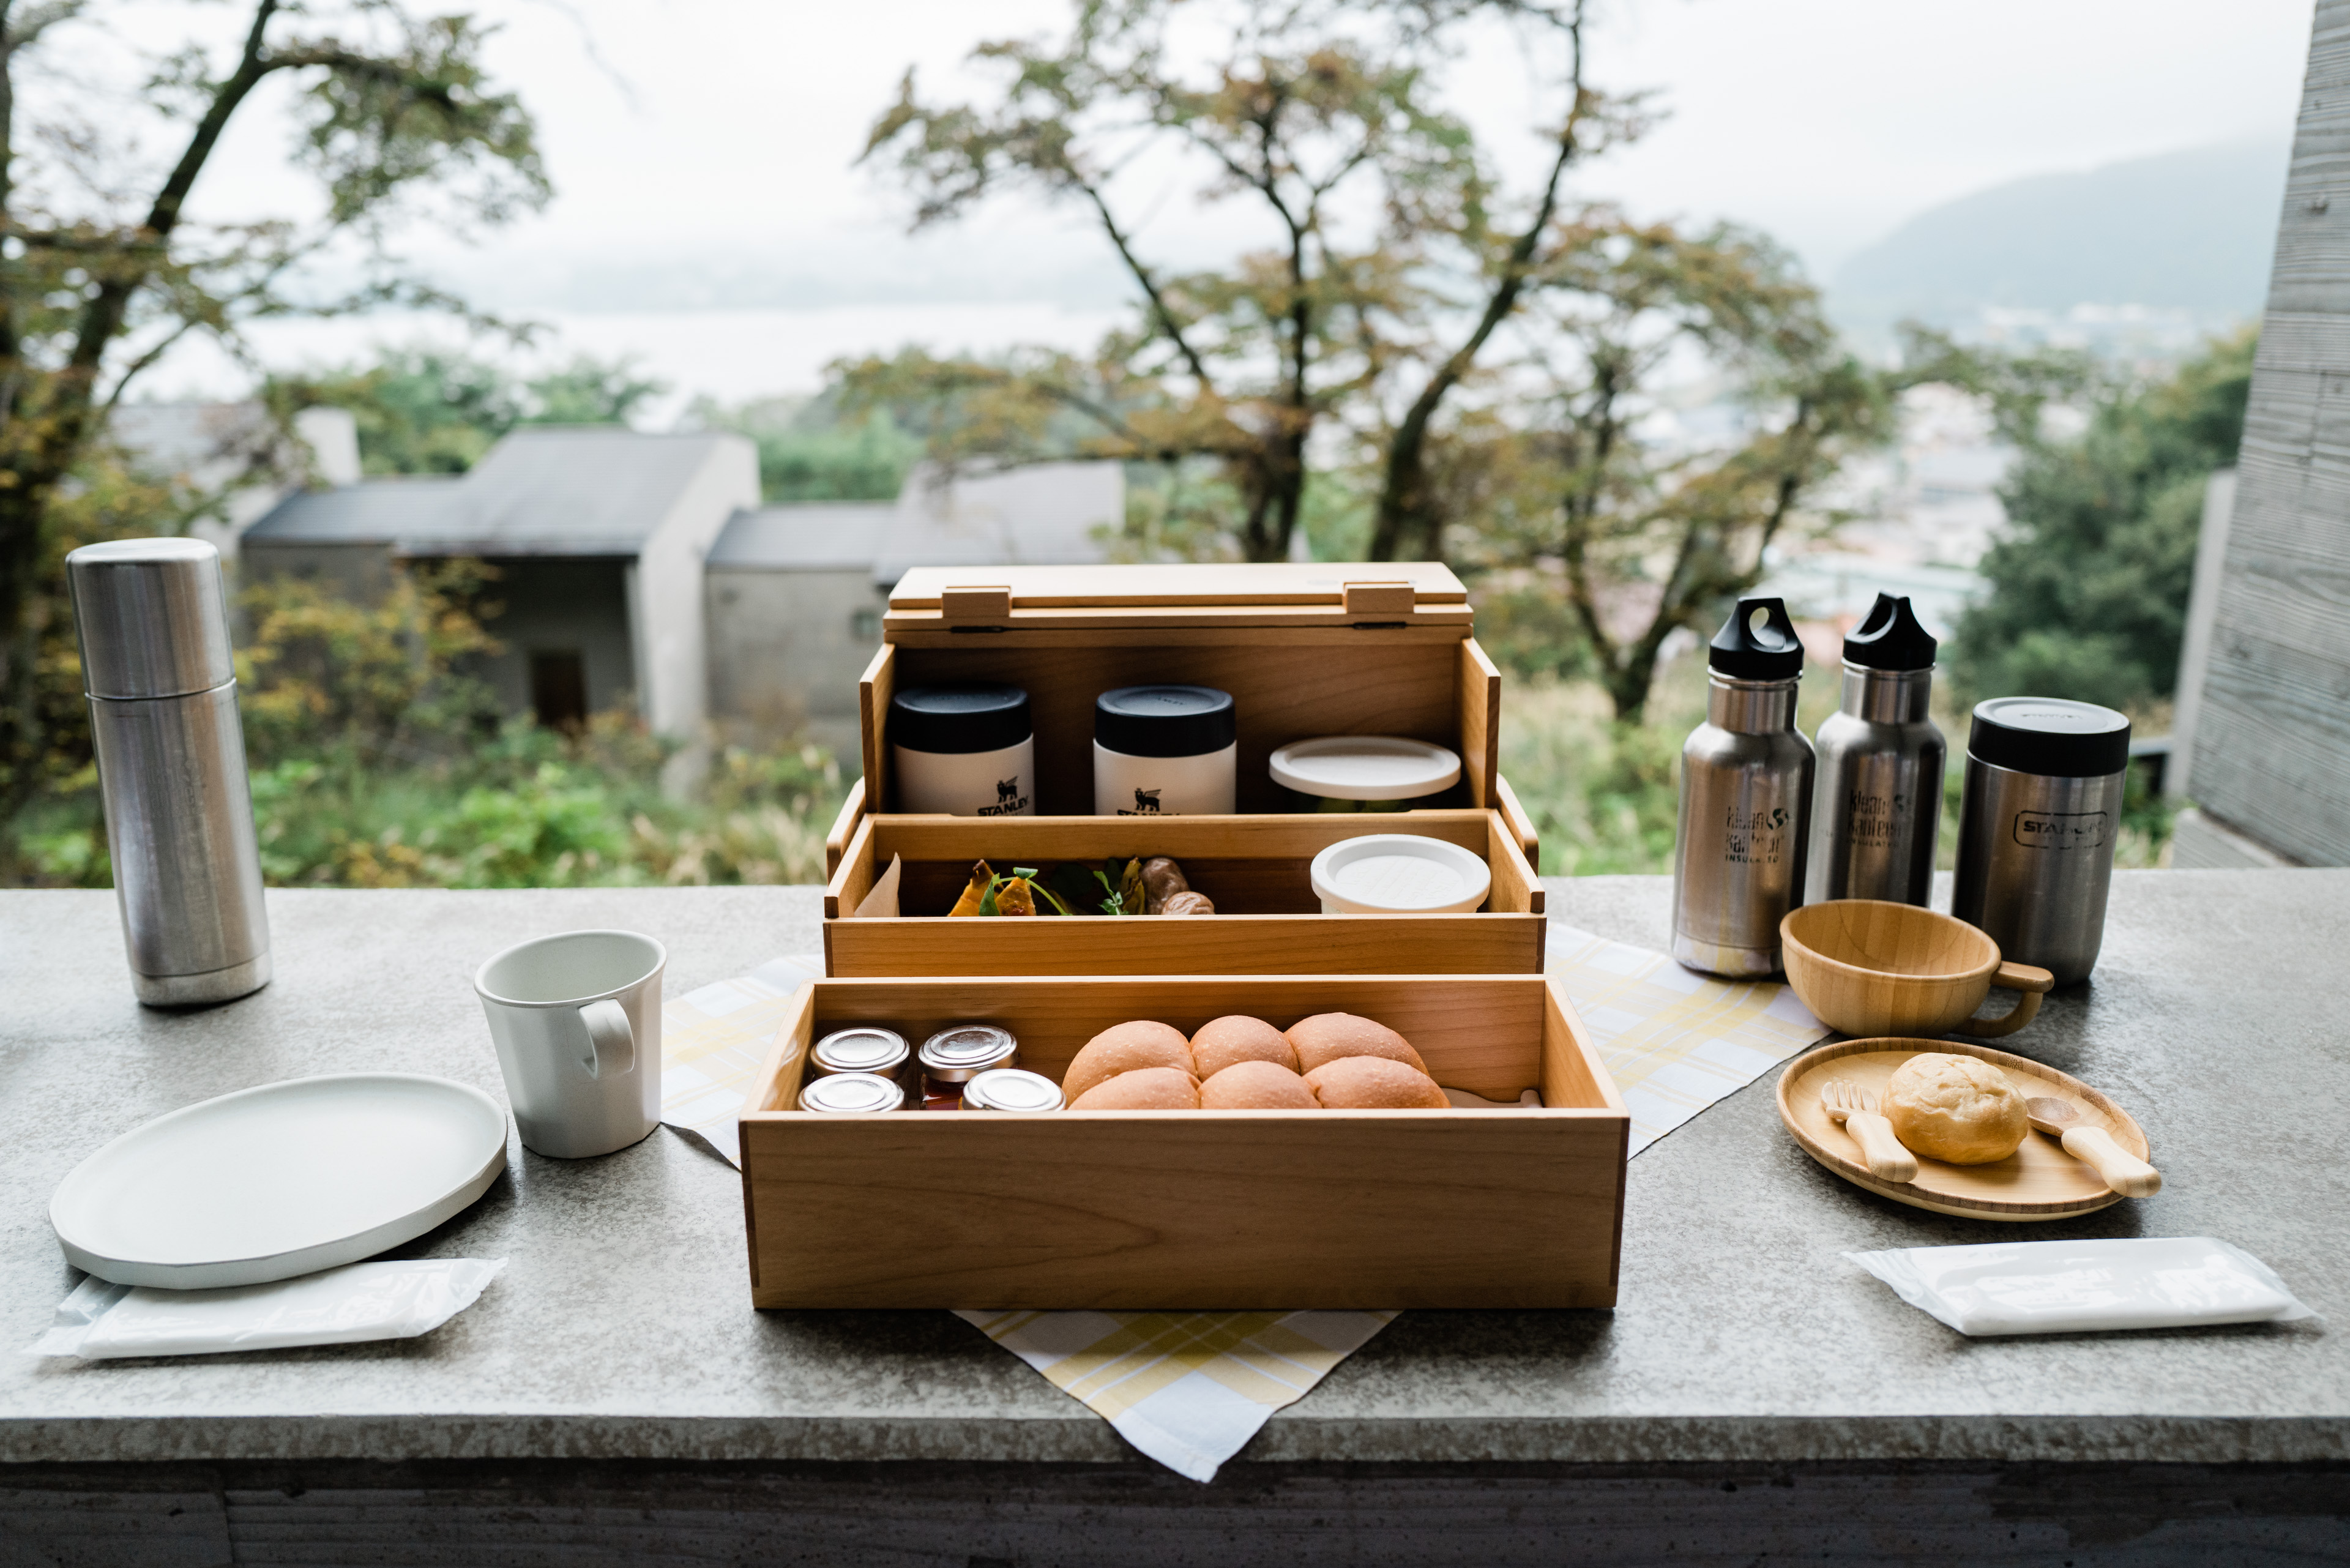 The breakfast box at Hoshinoya Fuji.